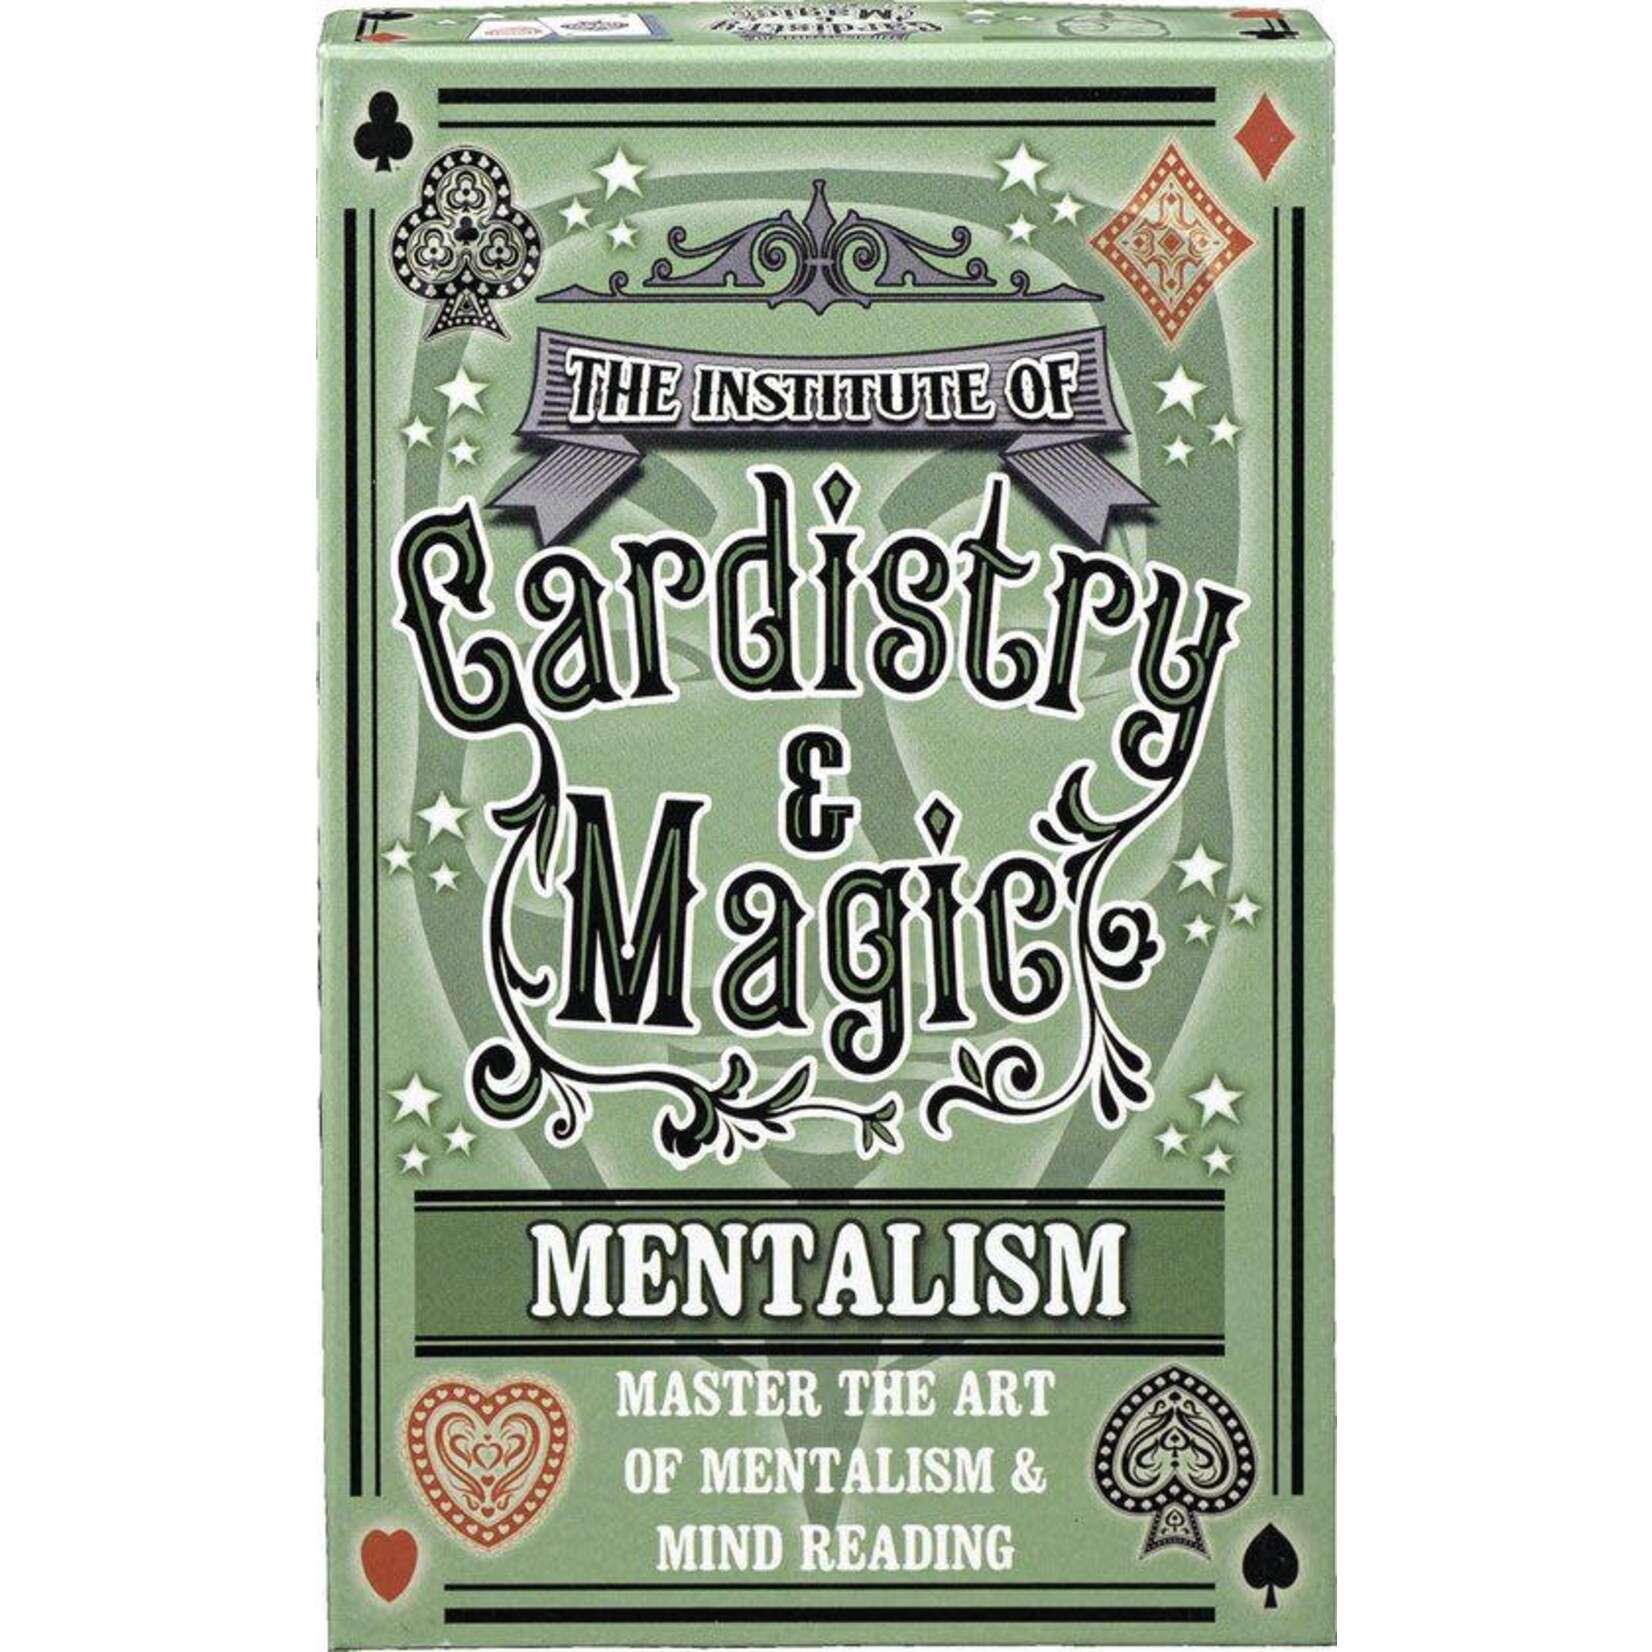 Institute of Cardistry and Magic - Mentalism